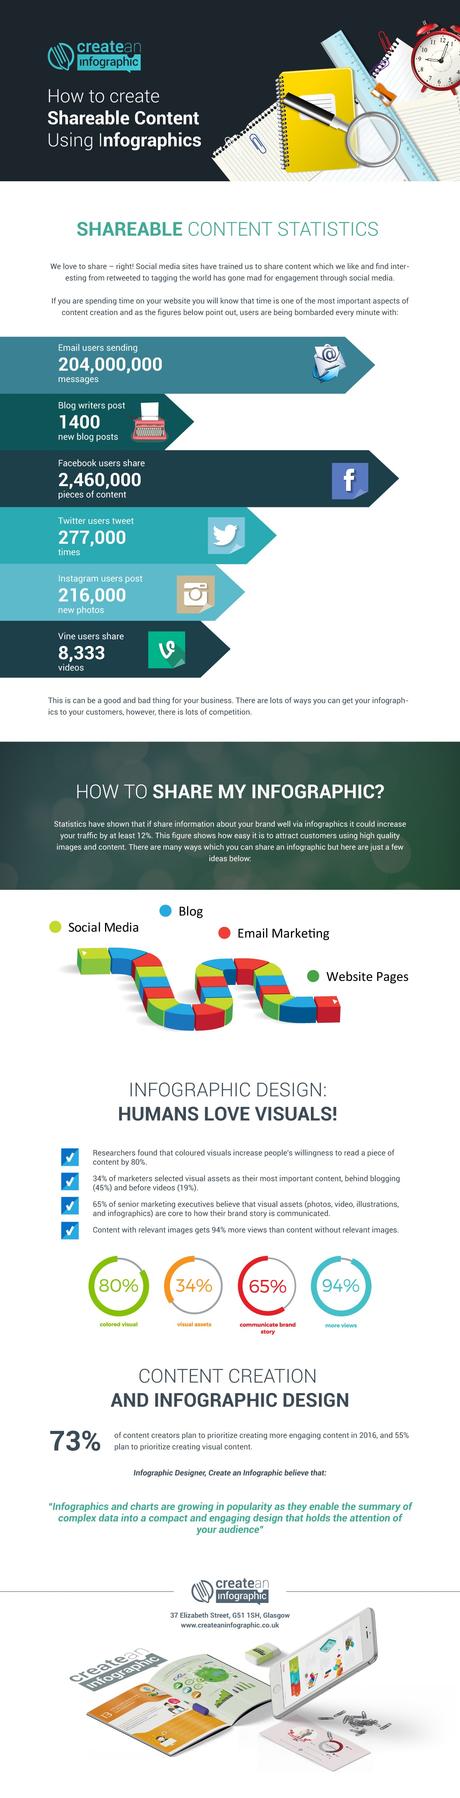 Las infografías como medio para compartir contenido con altas probabilidades de ser compartido